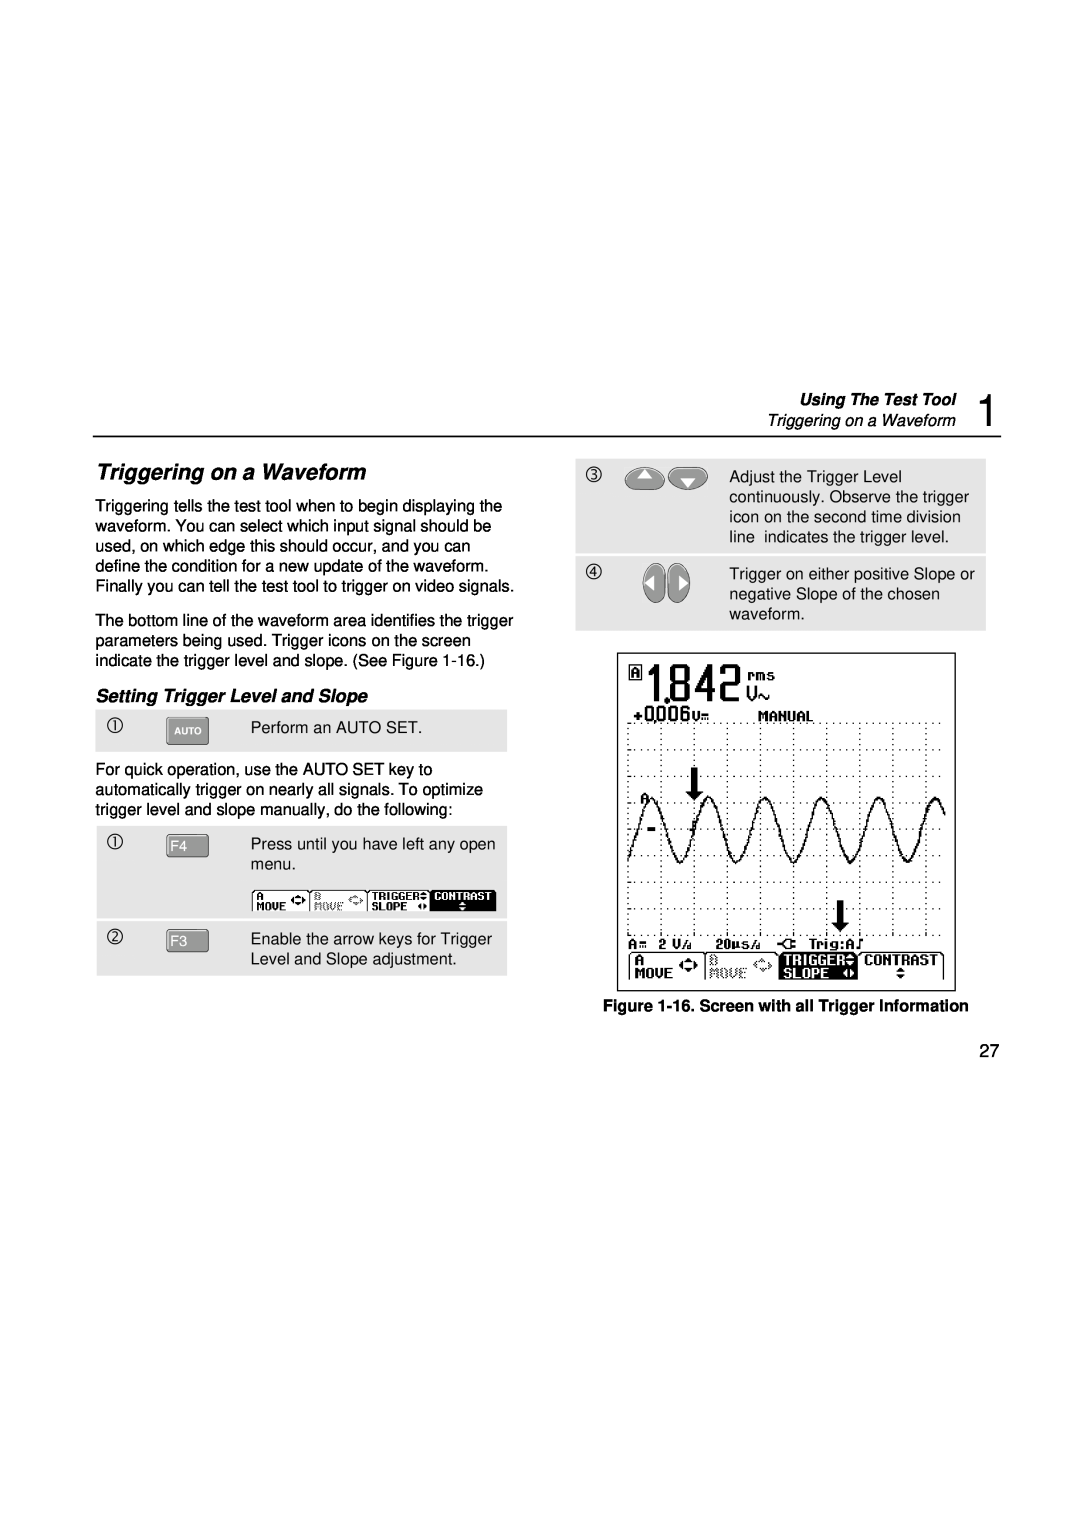 Fluke fluke123 Triggering on a Waveform, Setting Trigger Level and Slope, 16. Screen with all Trigger Information 